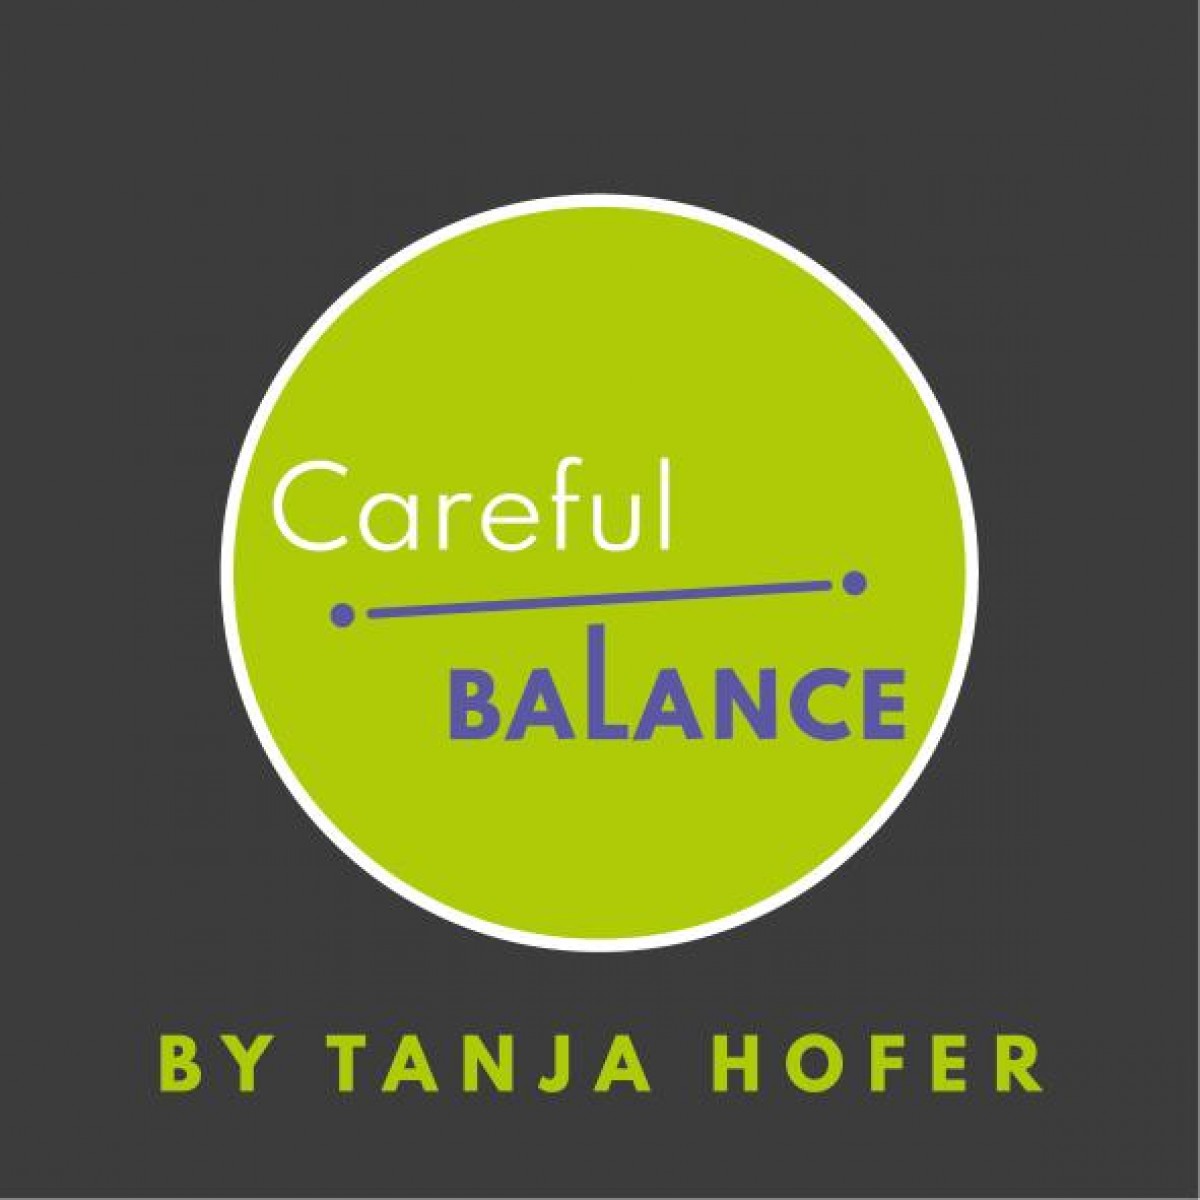 Careful Balance by Tanja Hofer